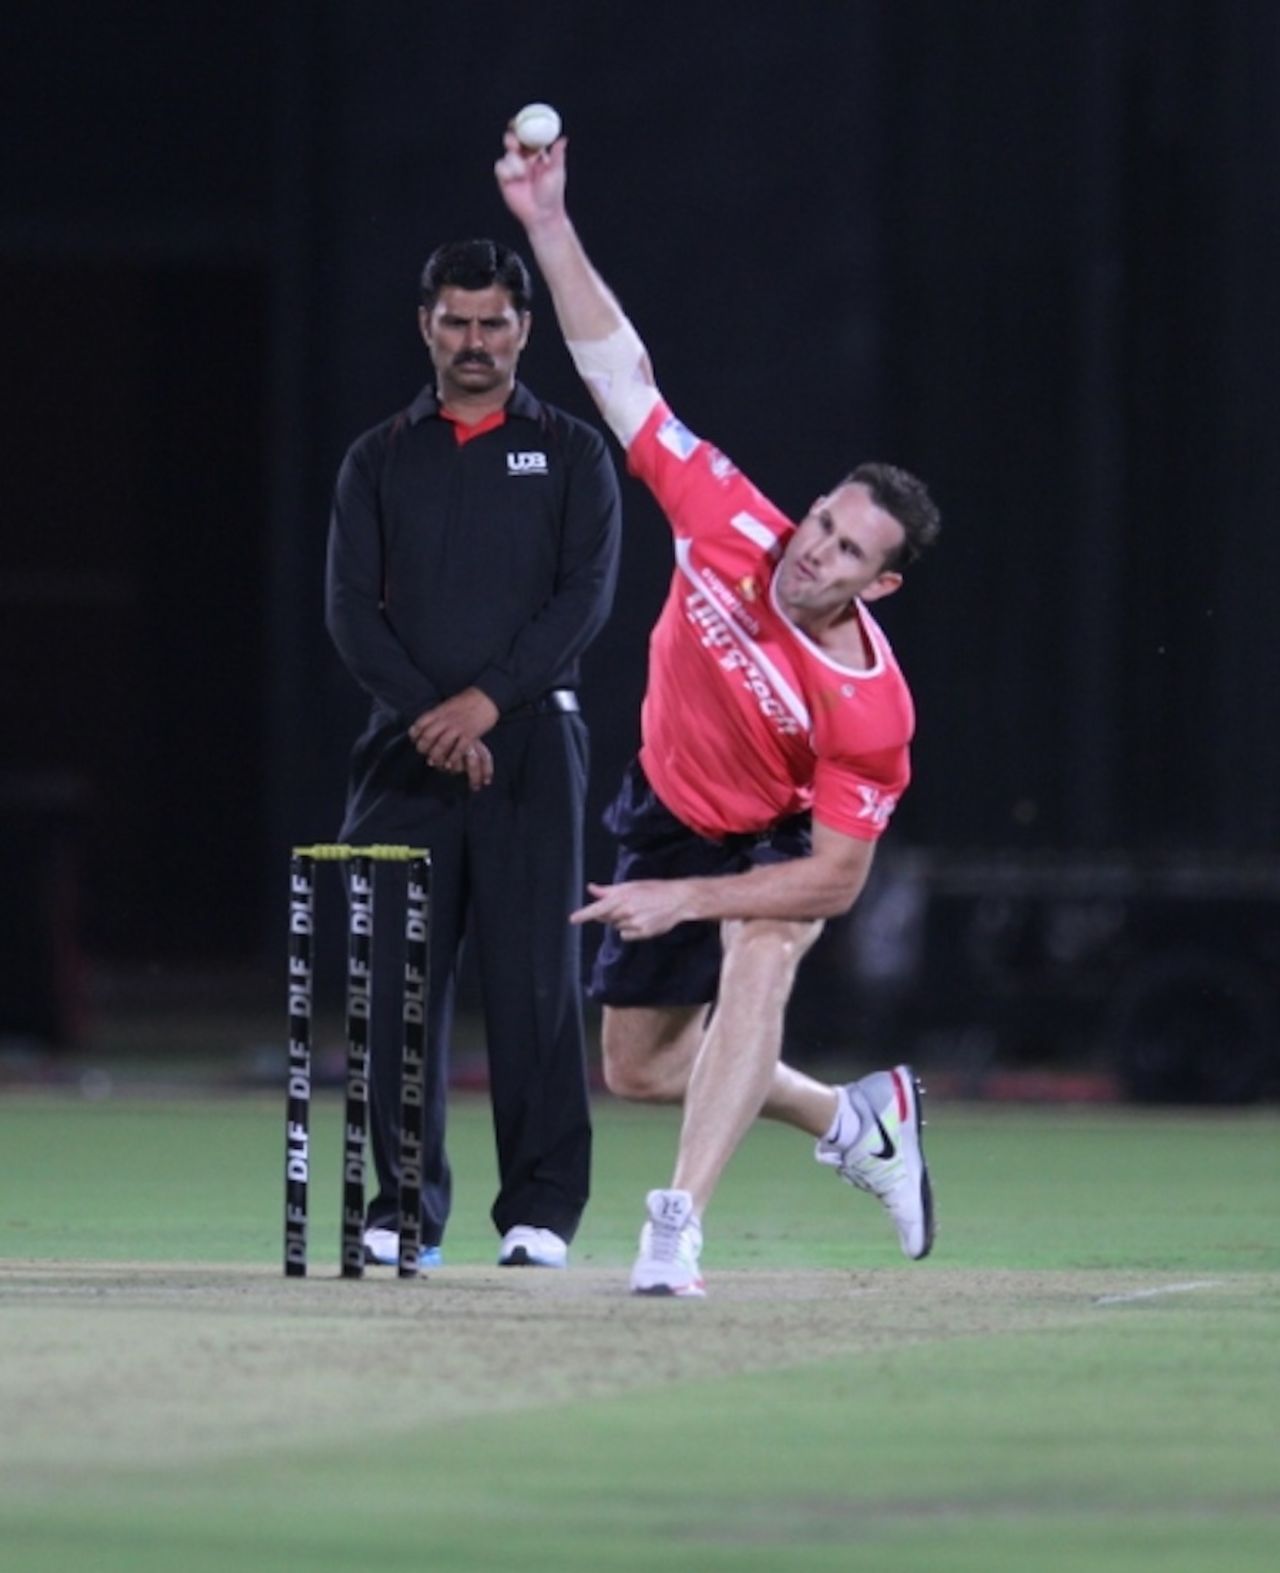 Shaun Tait in his bowling stride during a Rajasthan Royals practice match at the Sawai Mansingh Stadium in Jaipur